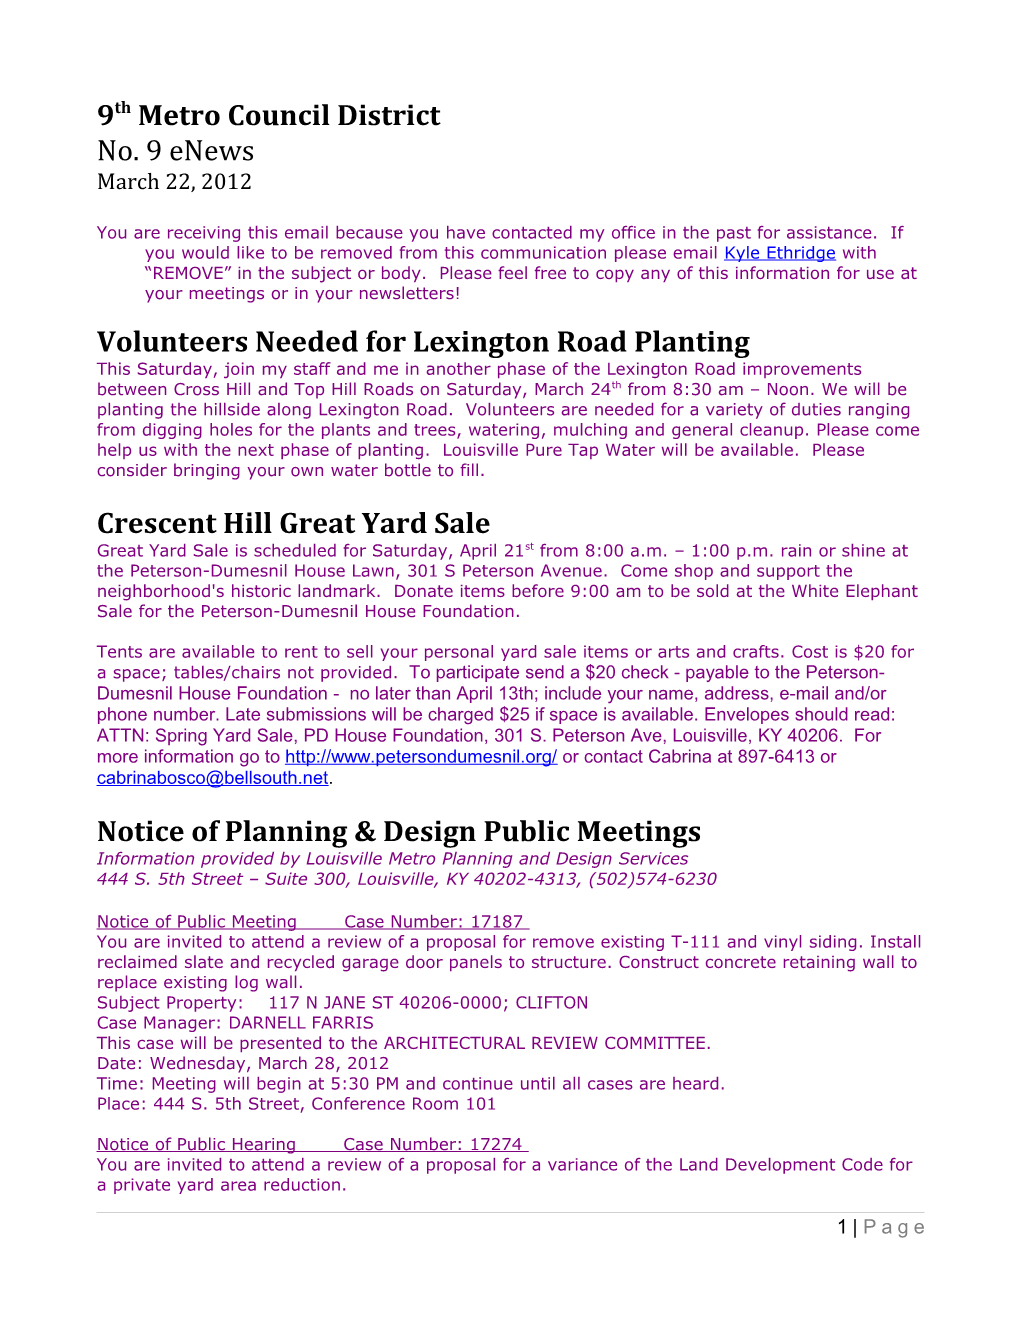 Volunteers Needed for Lexington Road Planting